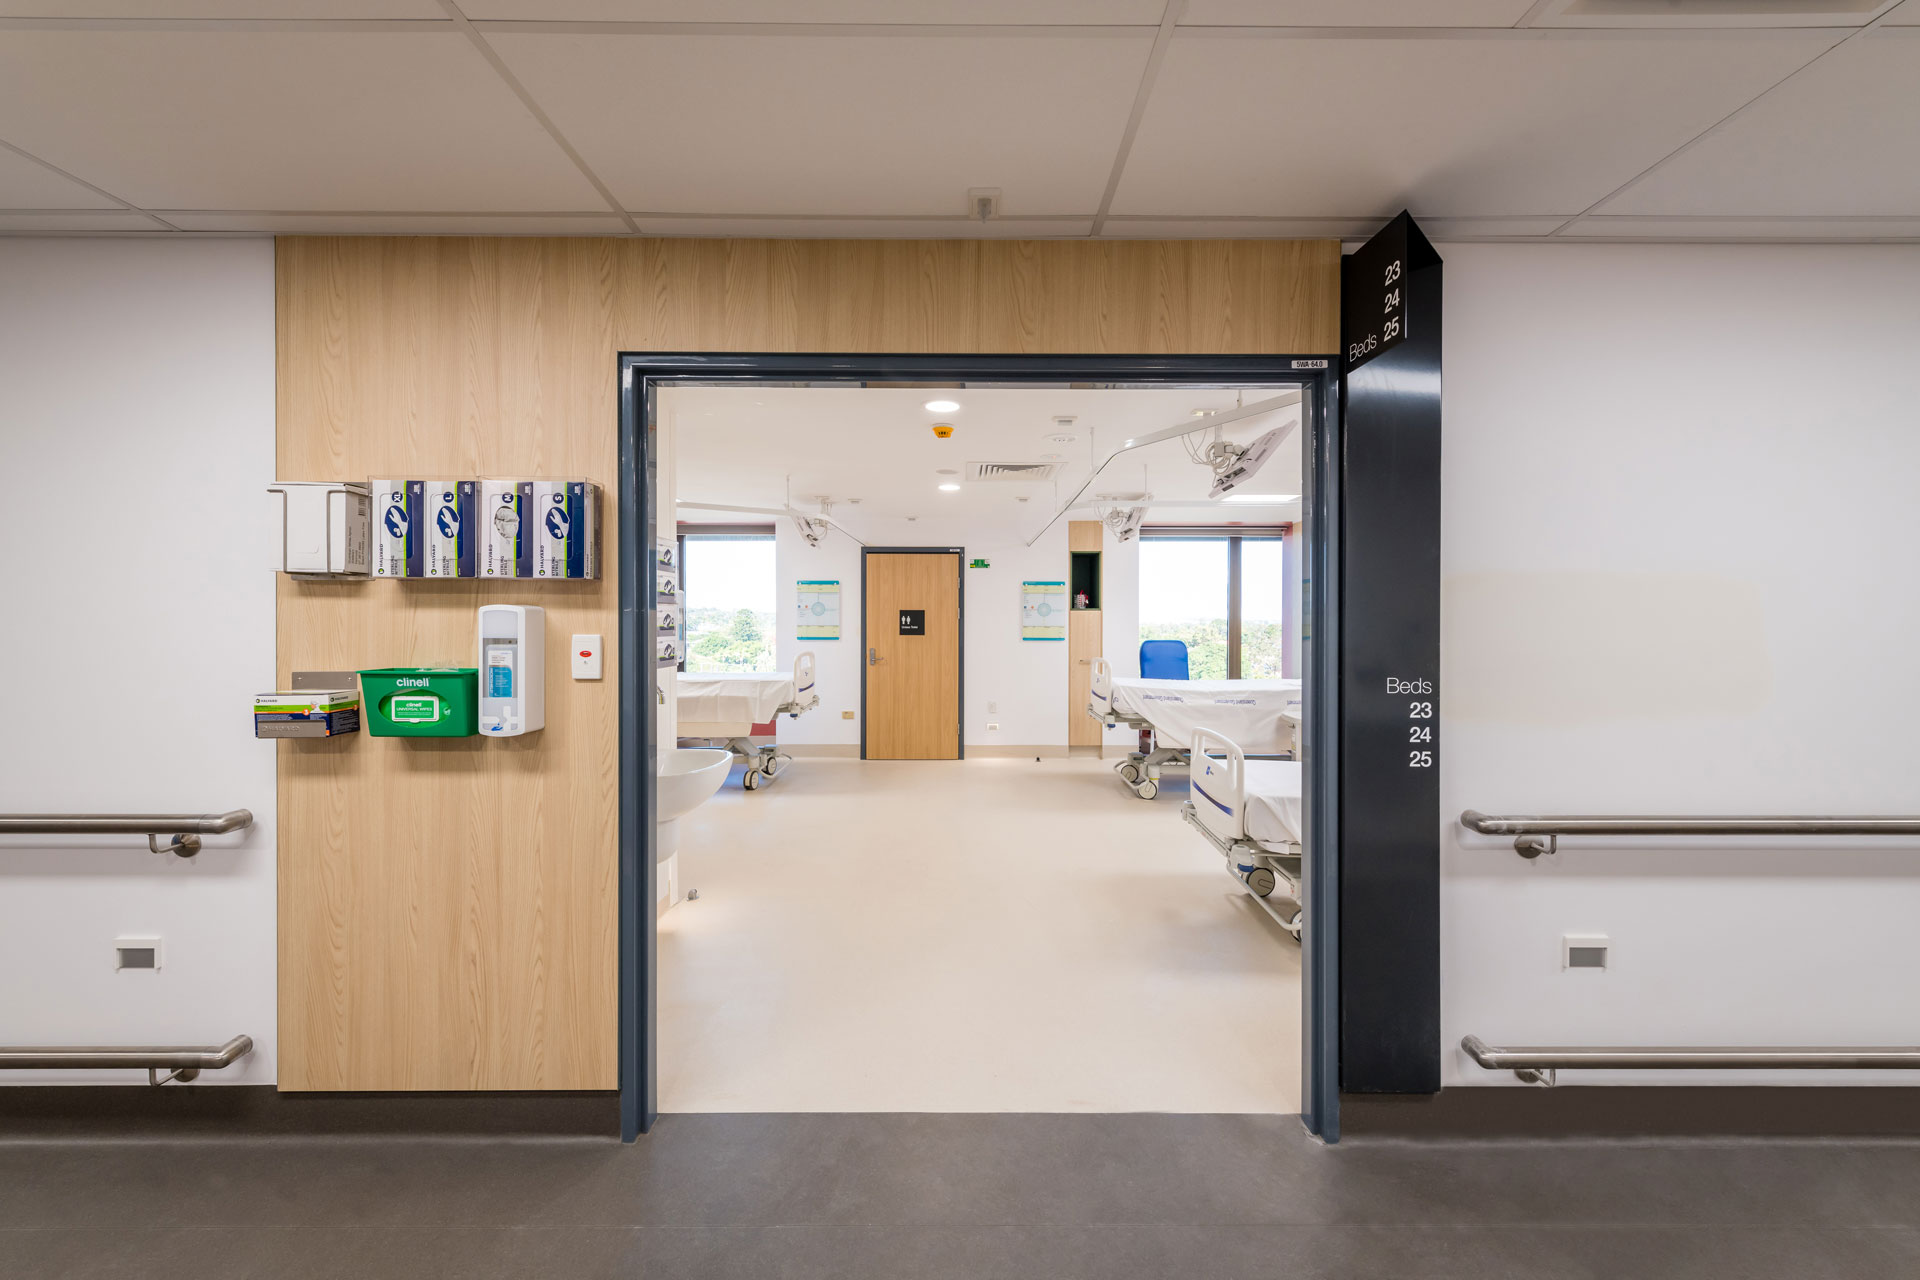 QEII Hospital doors upgrade